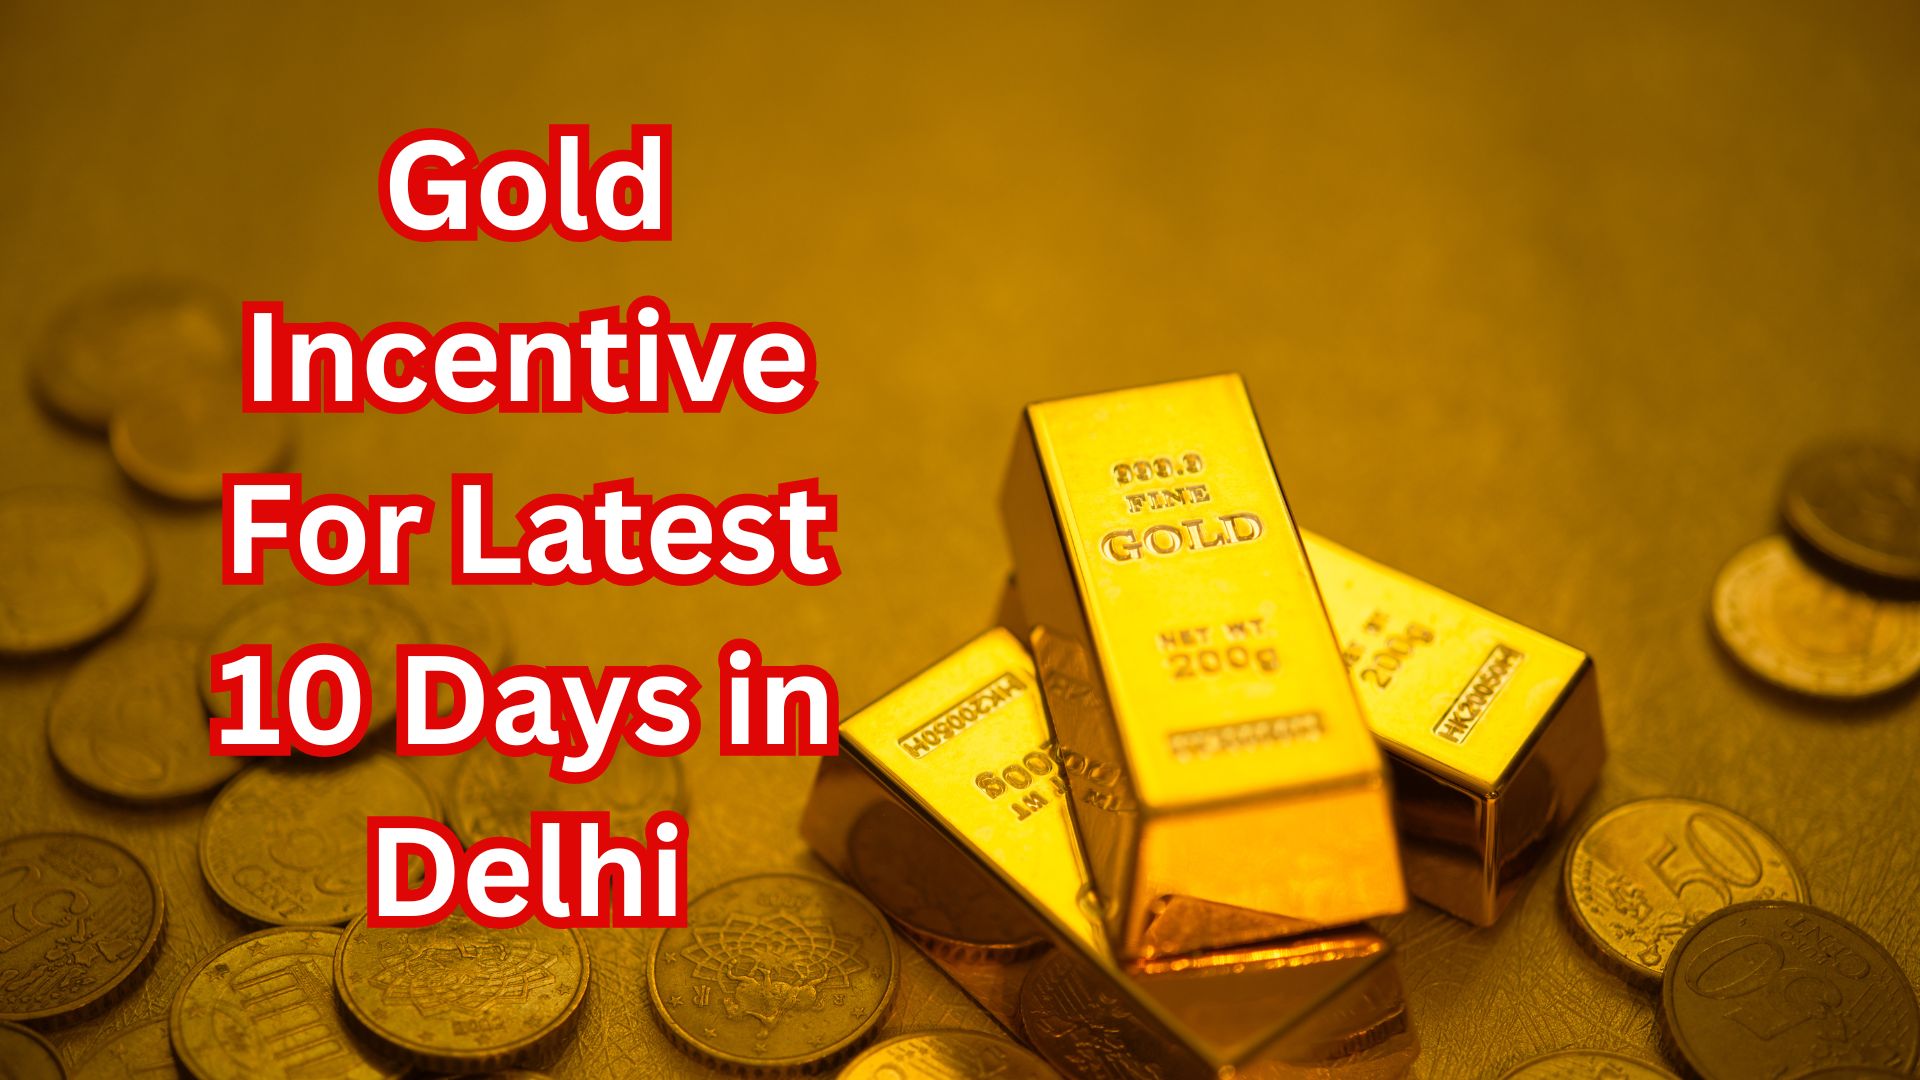 Gold Incentive For Latest 10 Days in Delhi